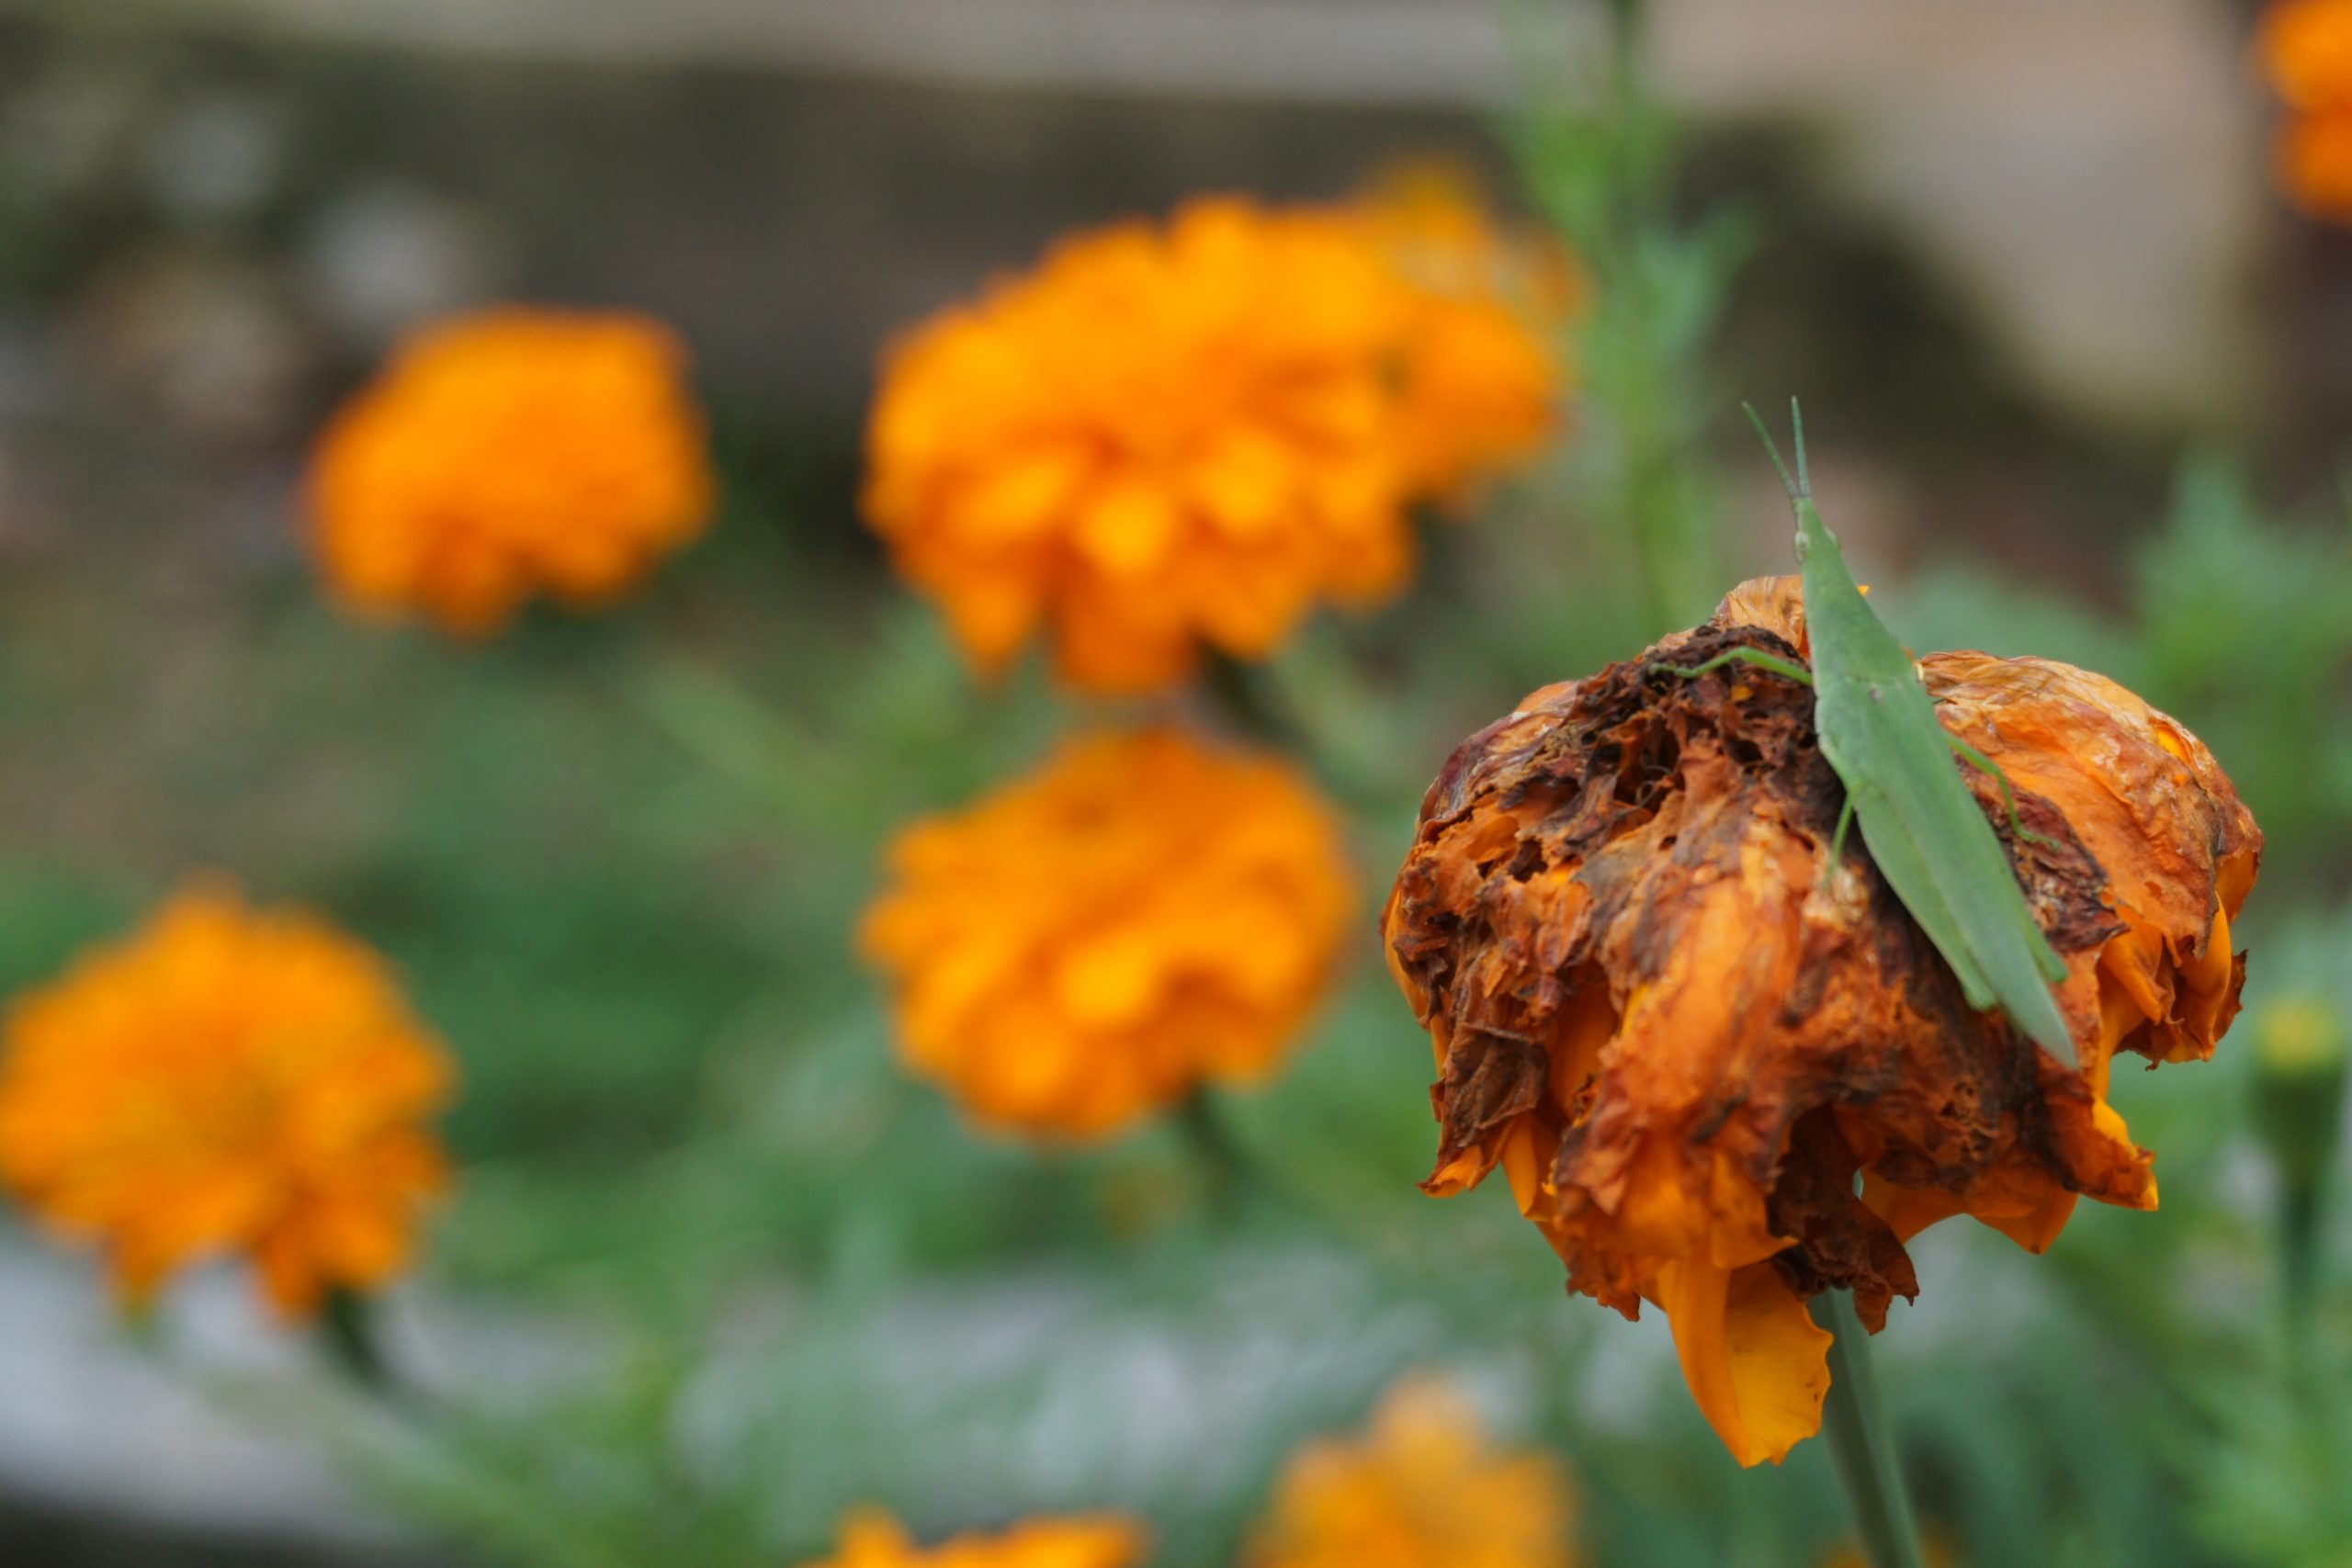 Grasshopper on a dead flower